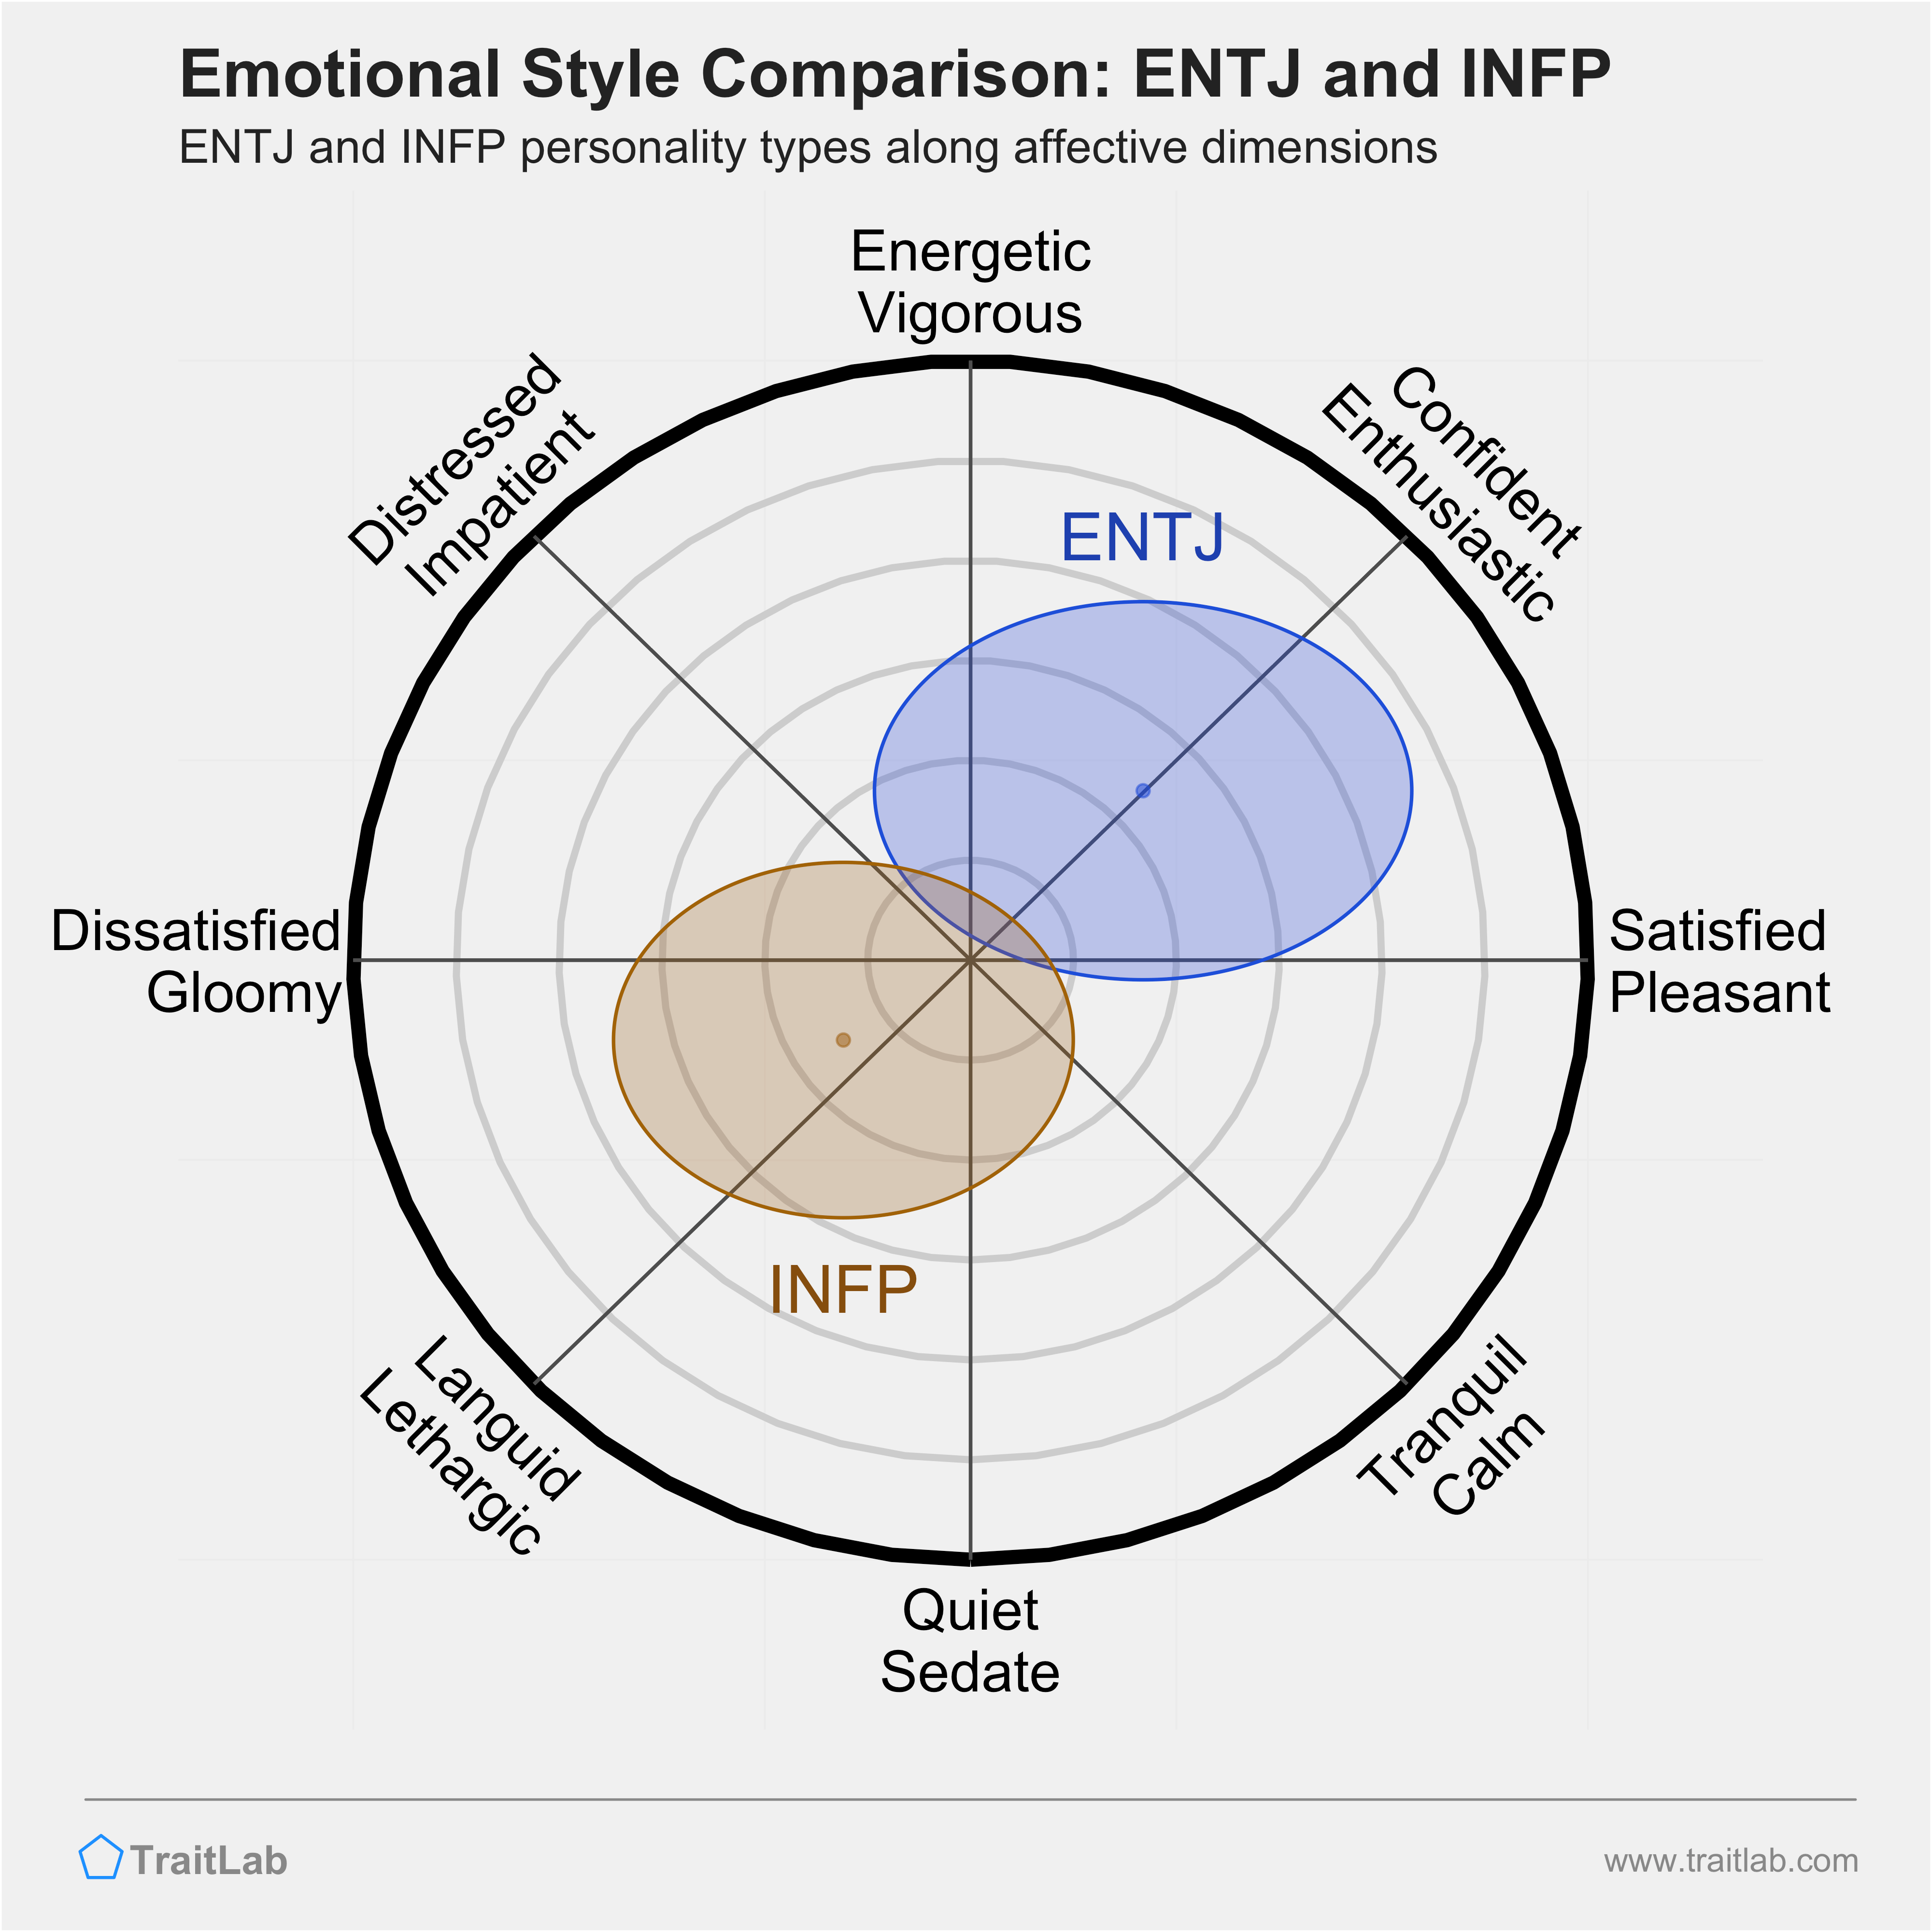 ENTJ and INFP comparison across emotional (affective) dimensions